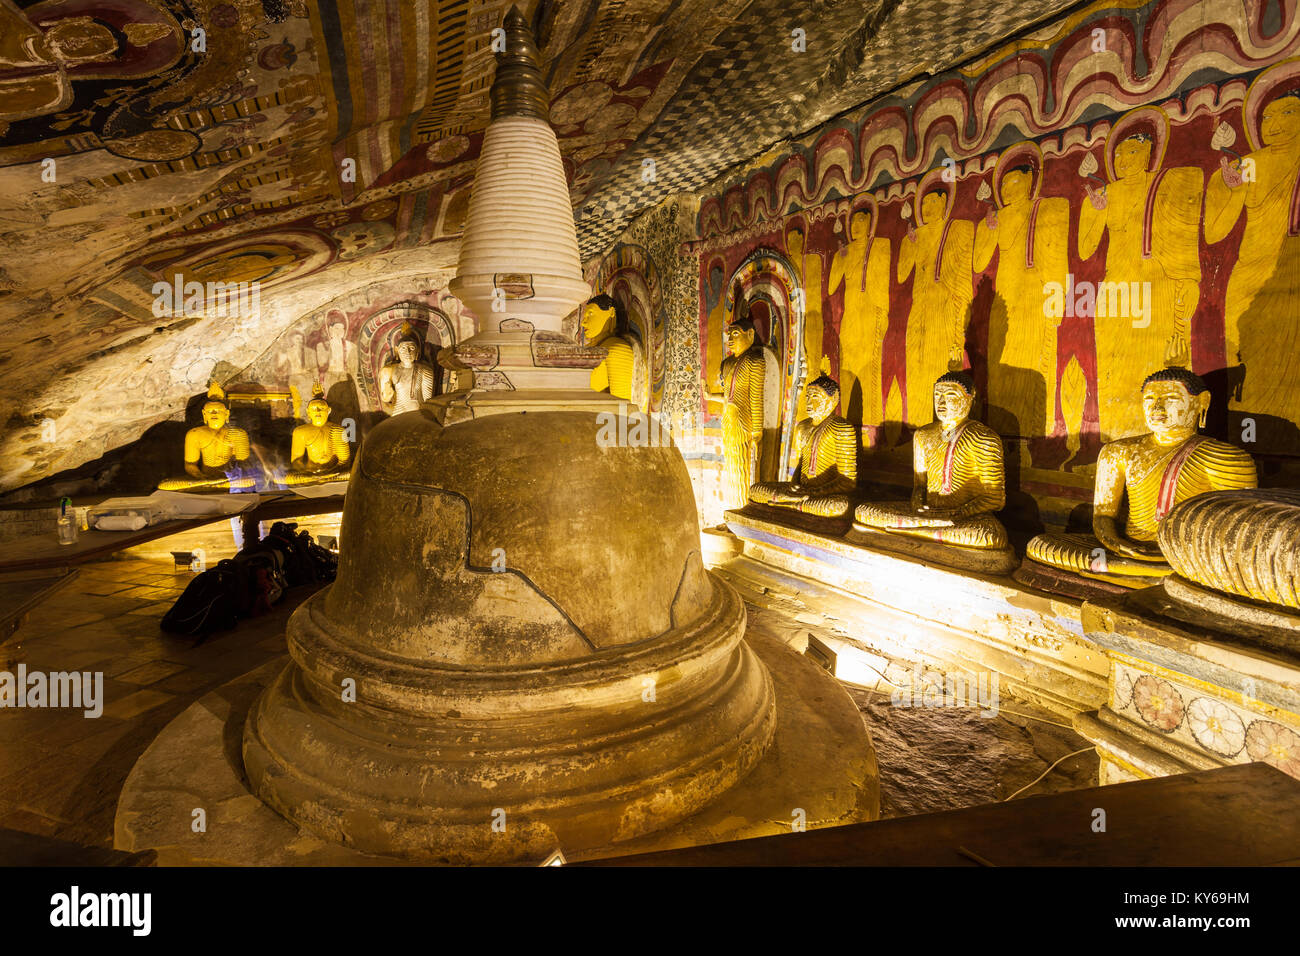 DAMBULLA, SRI LANKA - FEBRUARY 17, 2017: Stupa or dagoba and Buddha statues inside Dambulla Cave Temple. Cave Temple is a World Heritage Site near Dam Stock Photo